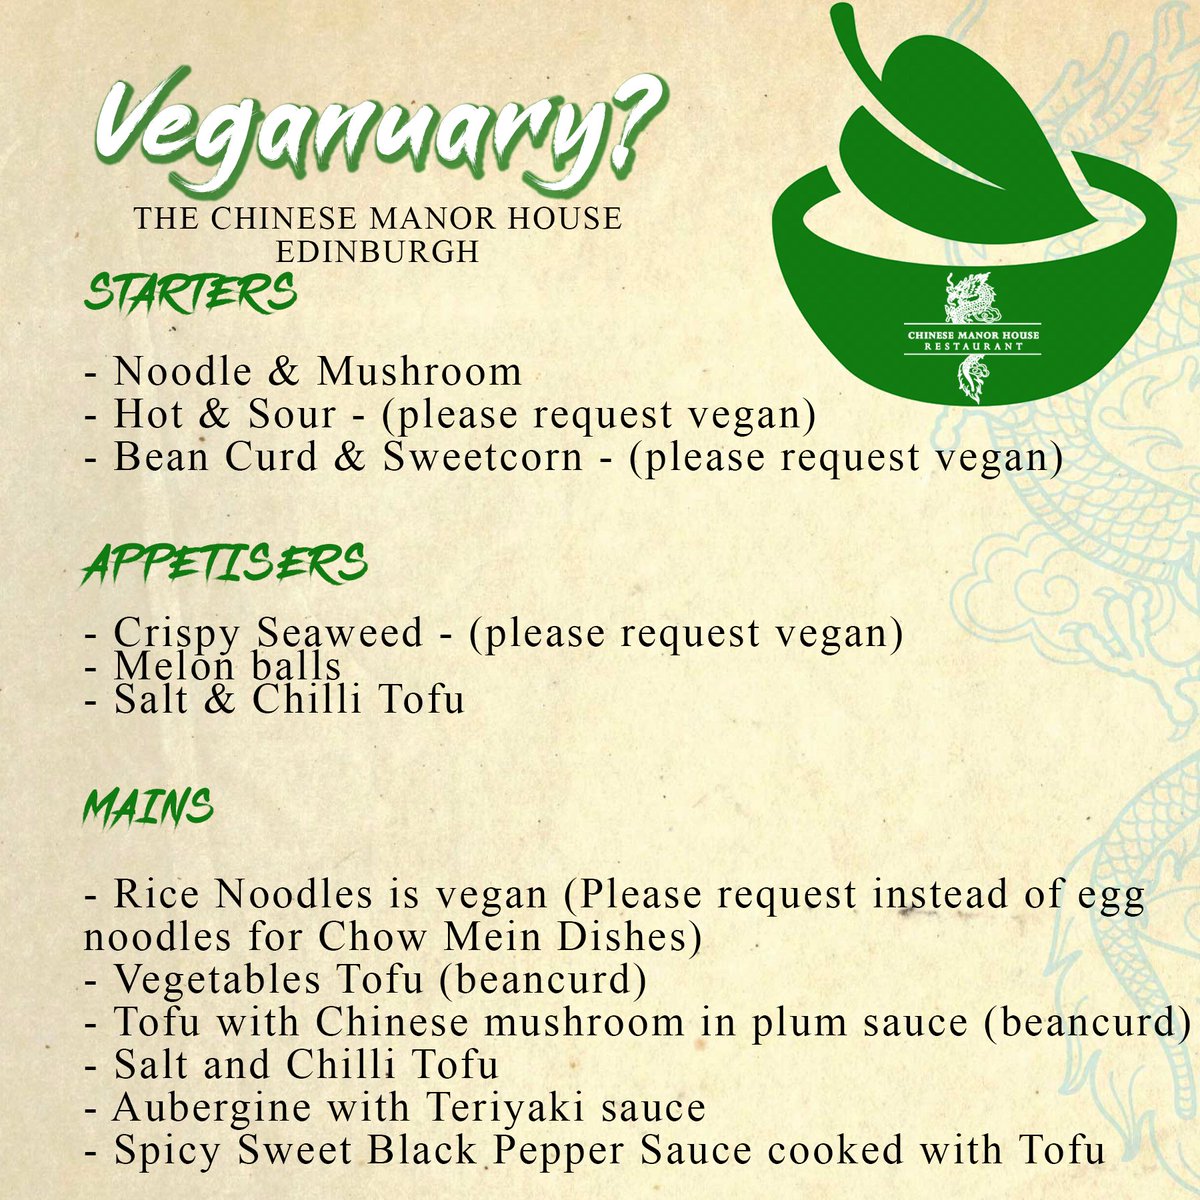 Veganuary? Here are our vegan options! Please let us know you want a vegan dish when booking/ordering.

Vegan requests/ideas welcome!

See you soon!

#veganedinburgh #edinburghvegan #veganscotland @ScotlandVegFest @TheVeganSociety @vegan_edi @vegan #edinburgh #scotland